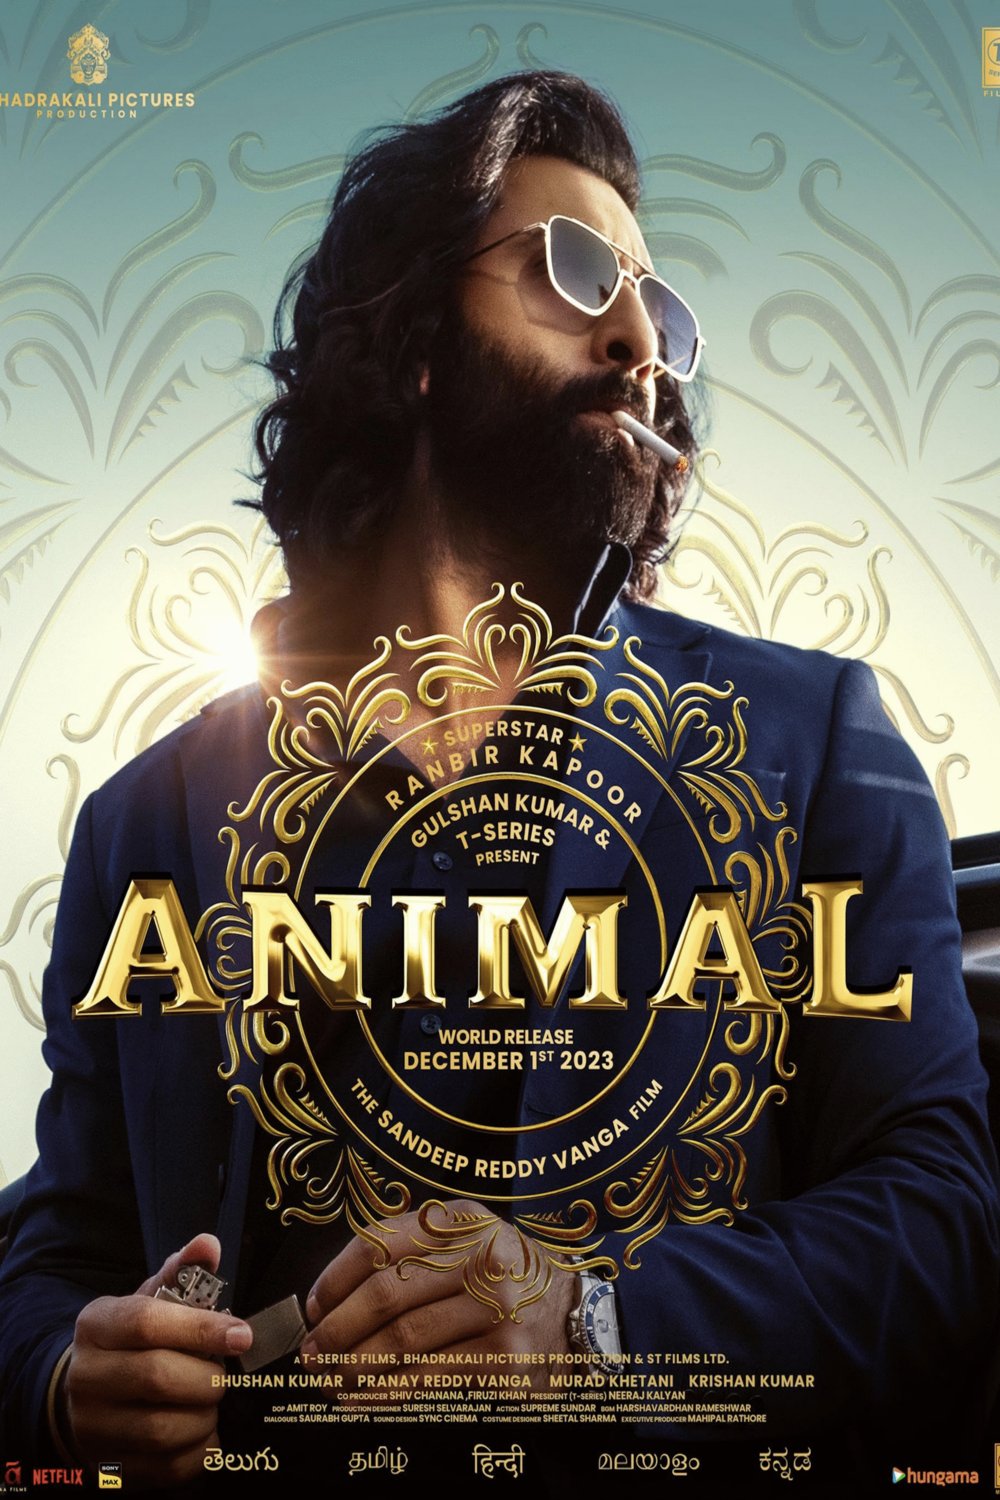 Hindi poster of the movie Animal